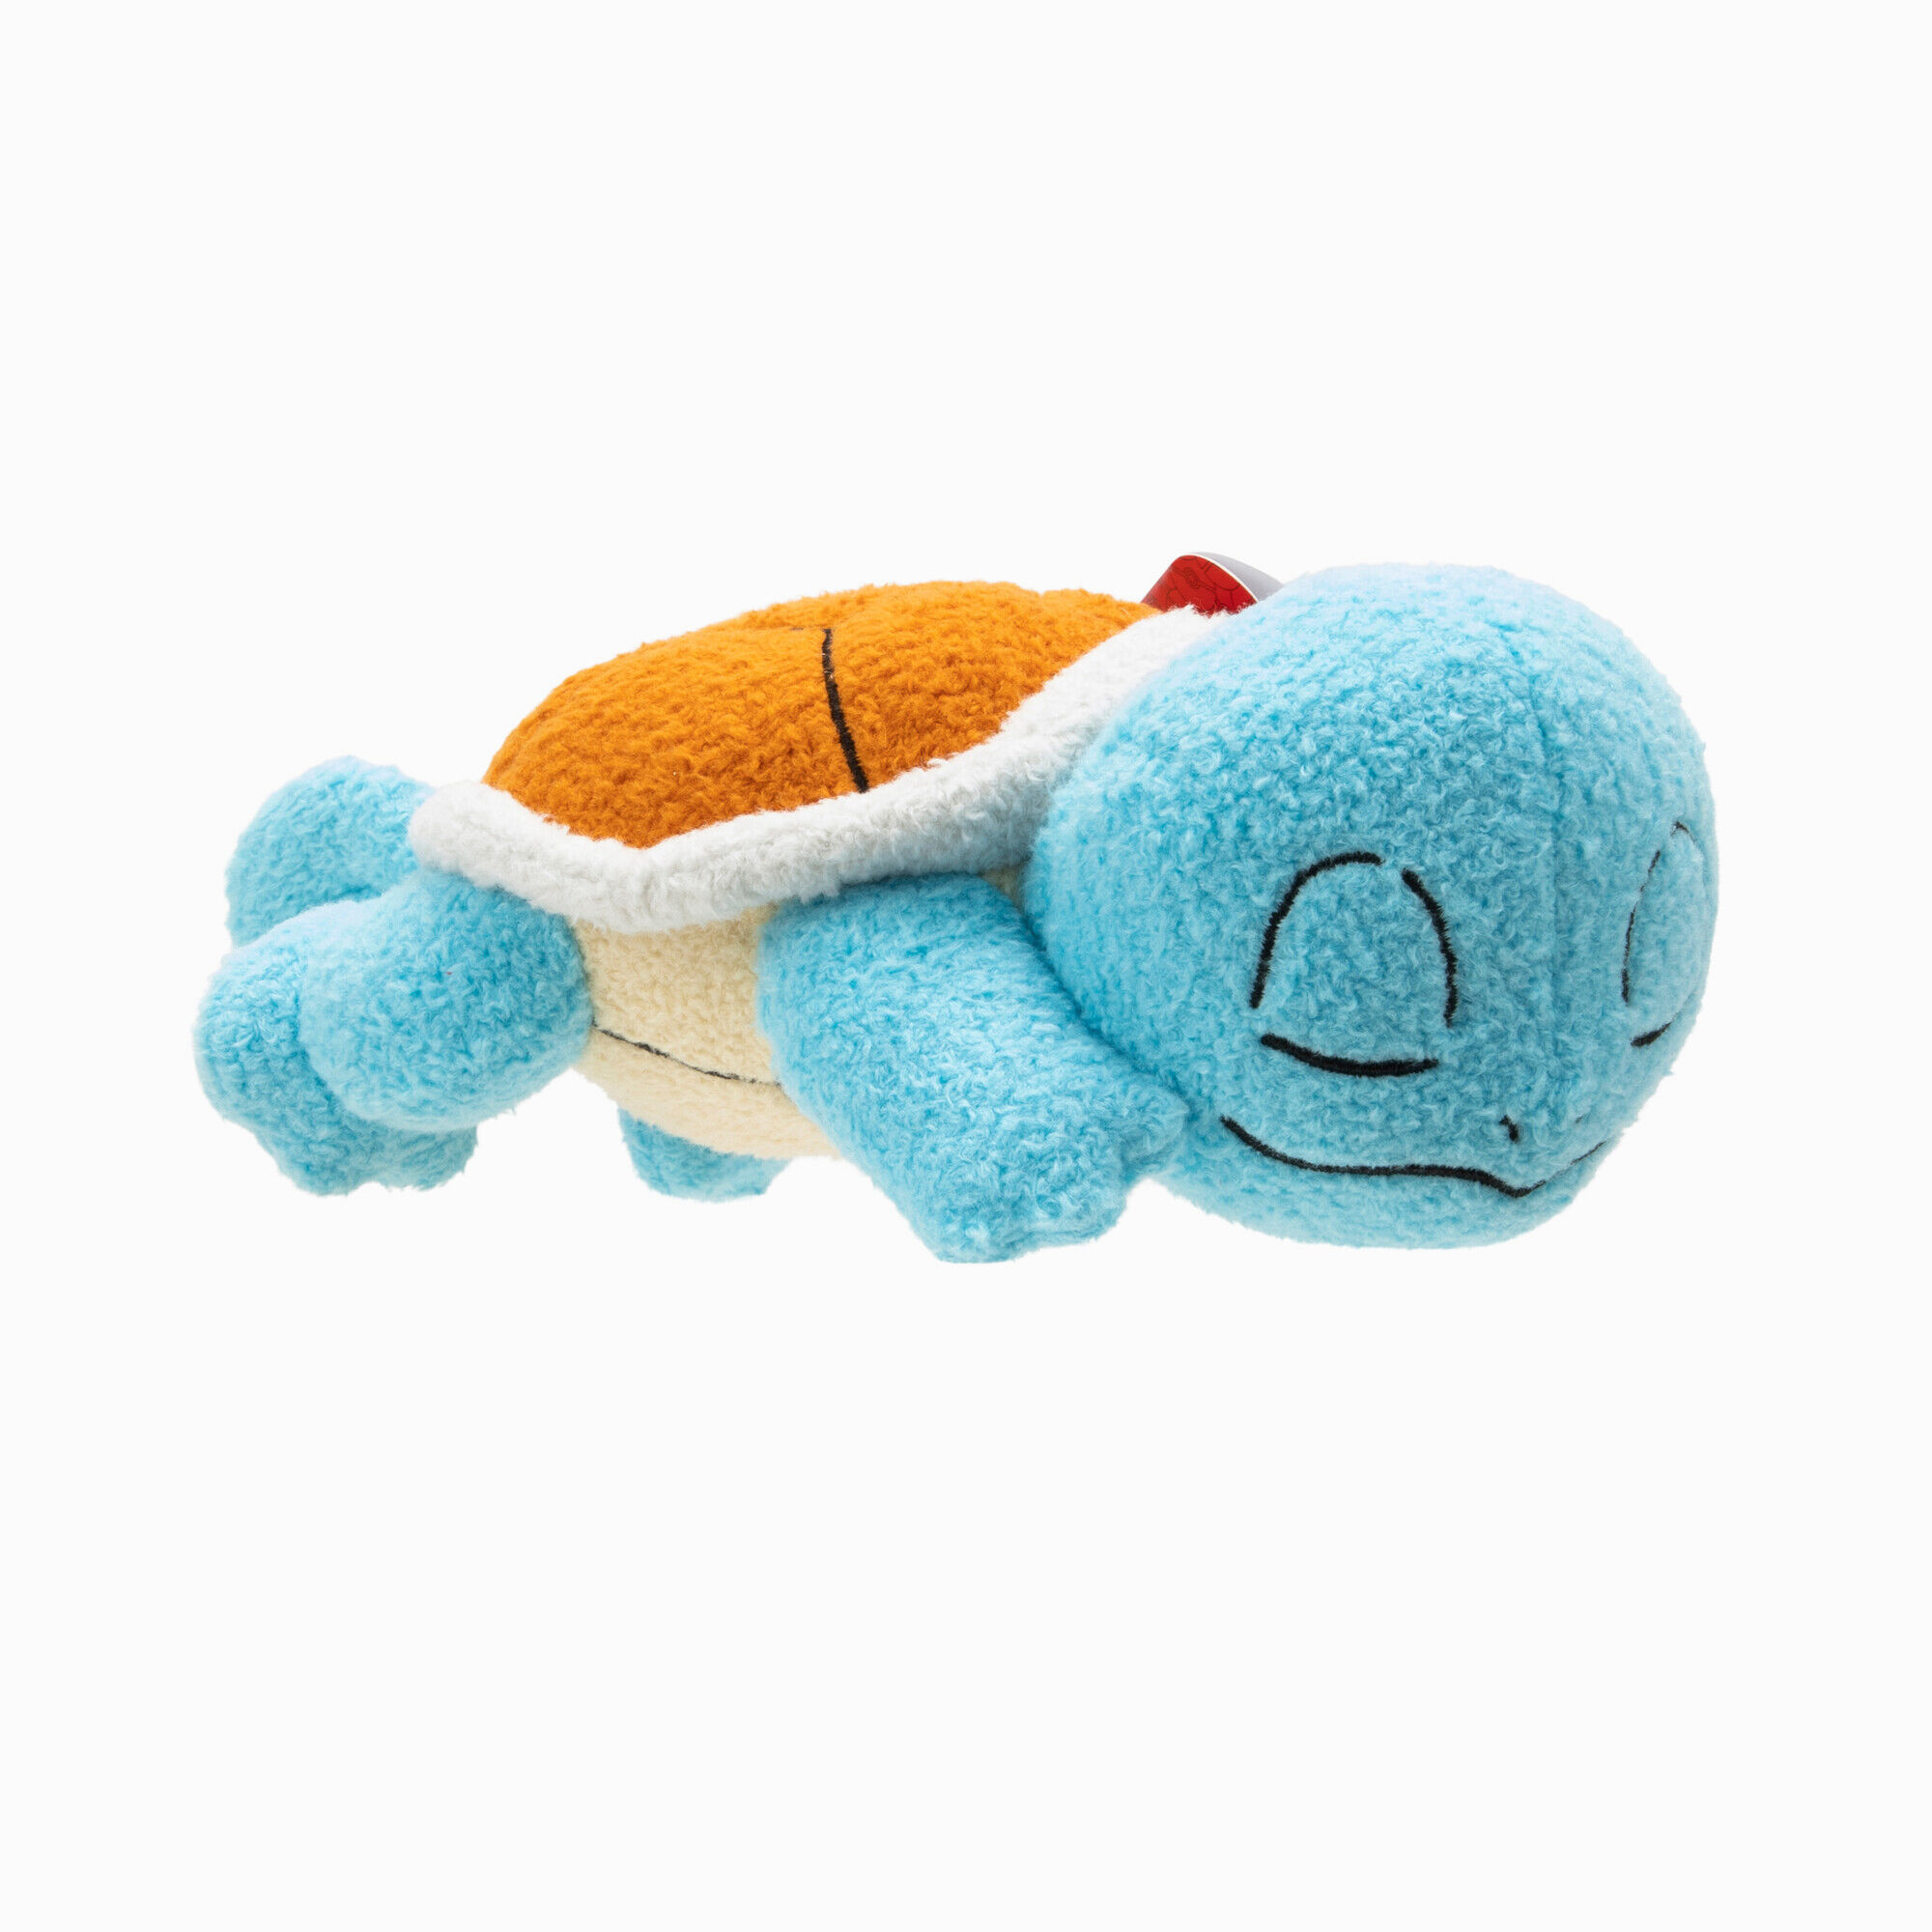 View Claires Pokémon 5 Sleeping Plush Toy Styles Vary information